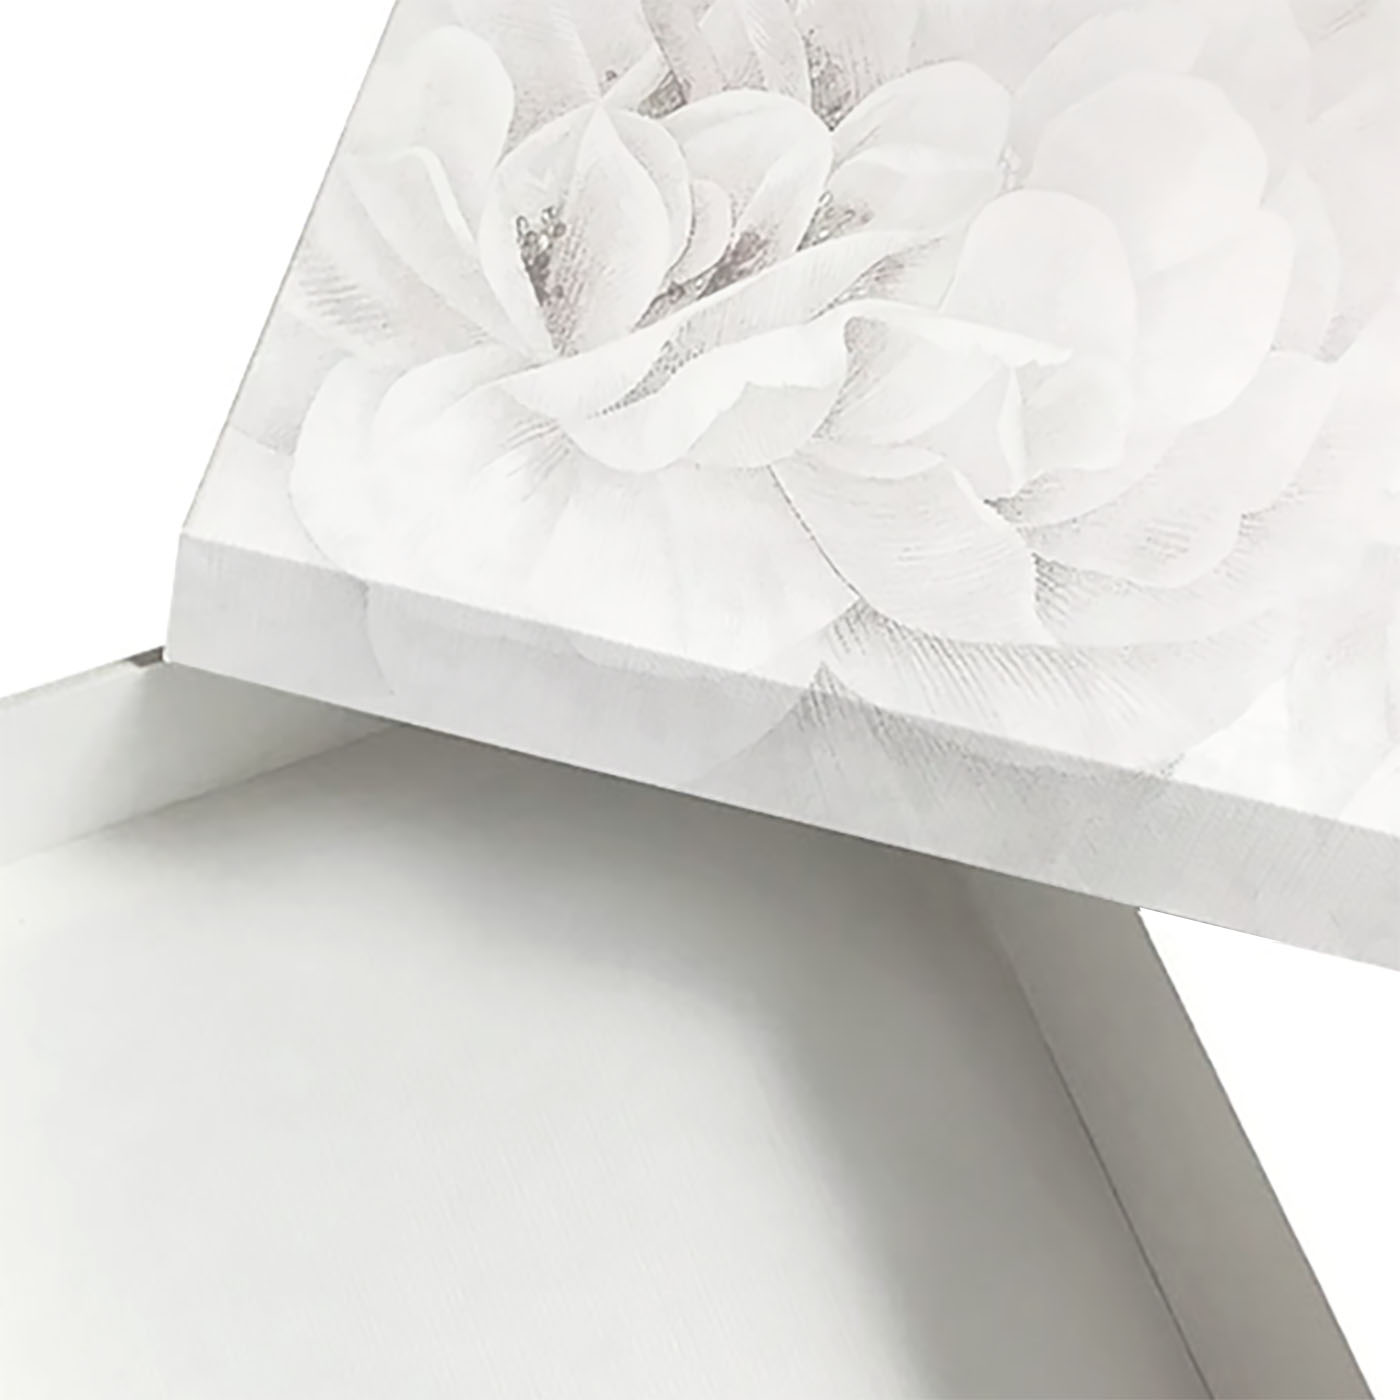 Black and White Floral | JRV Paper